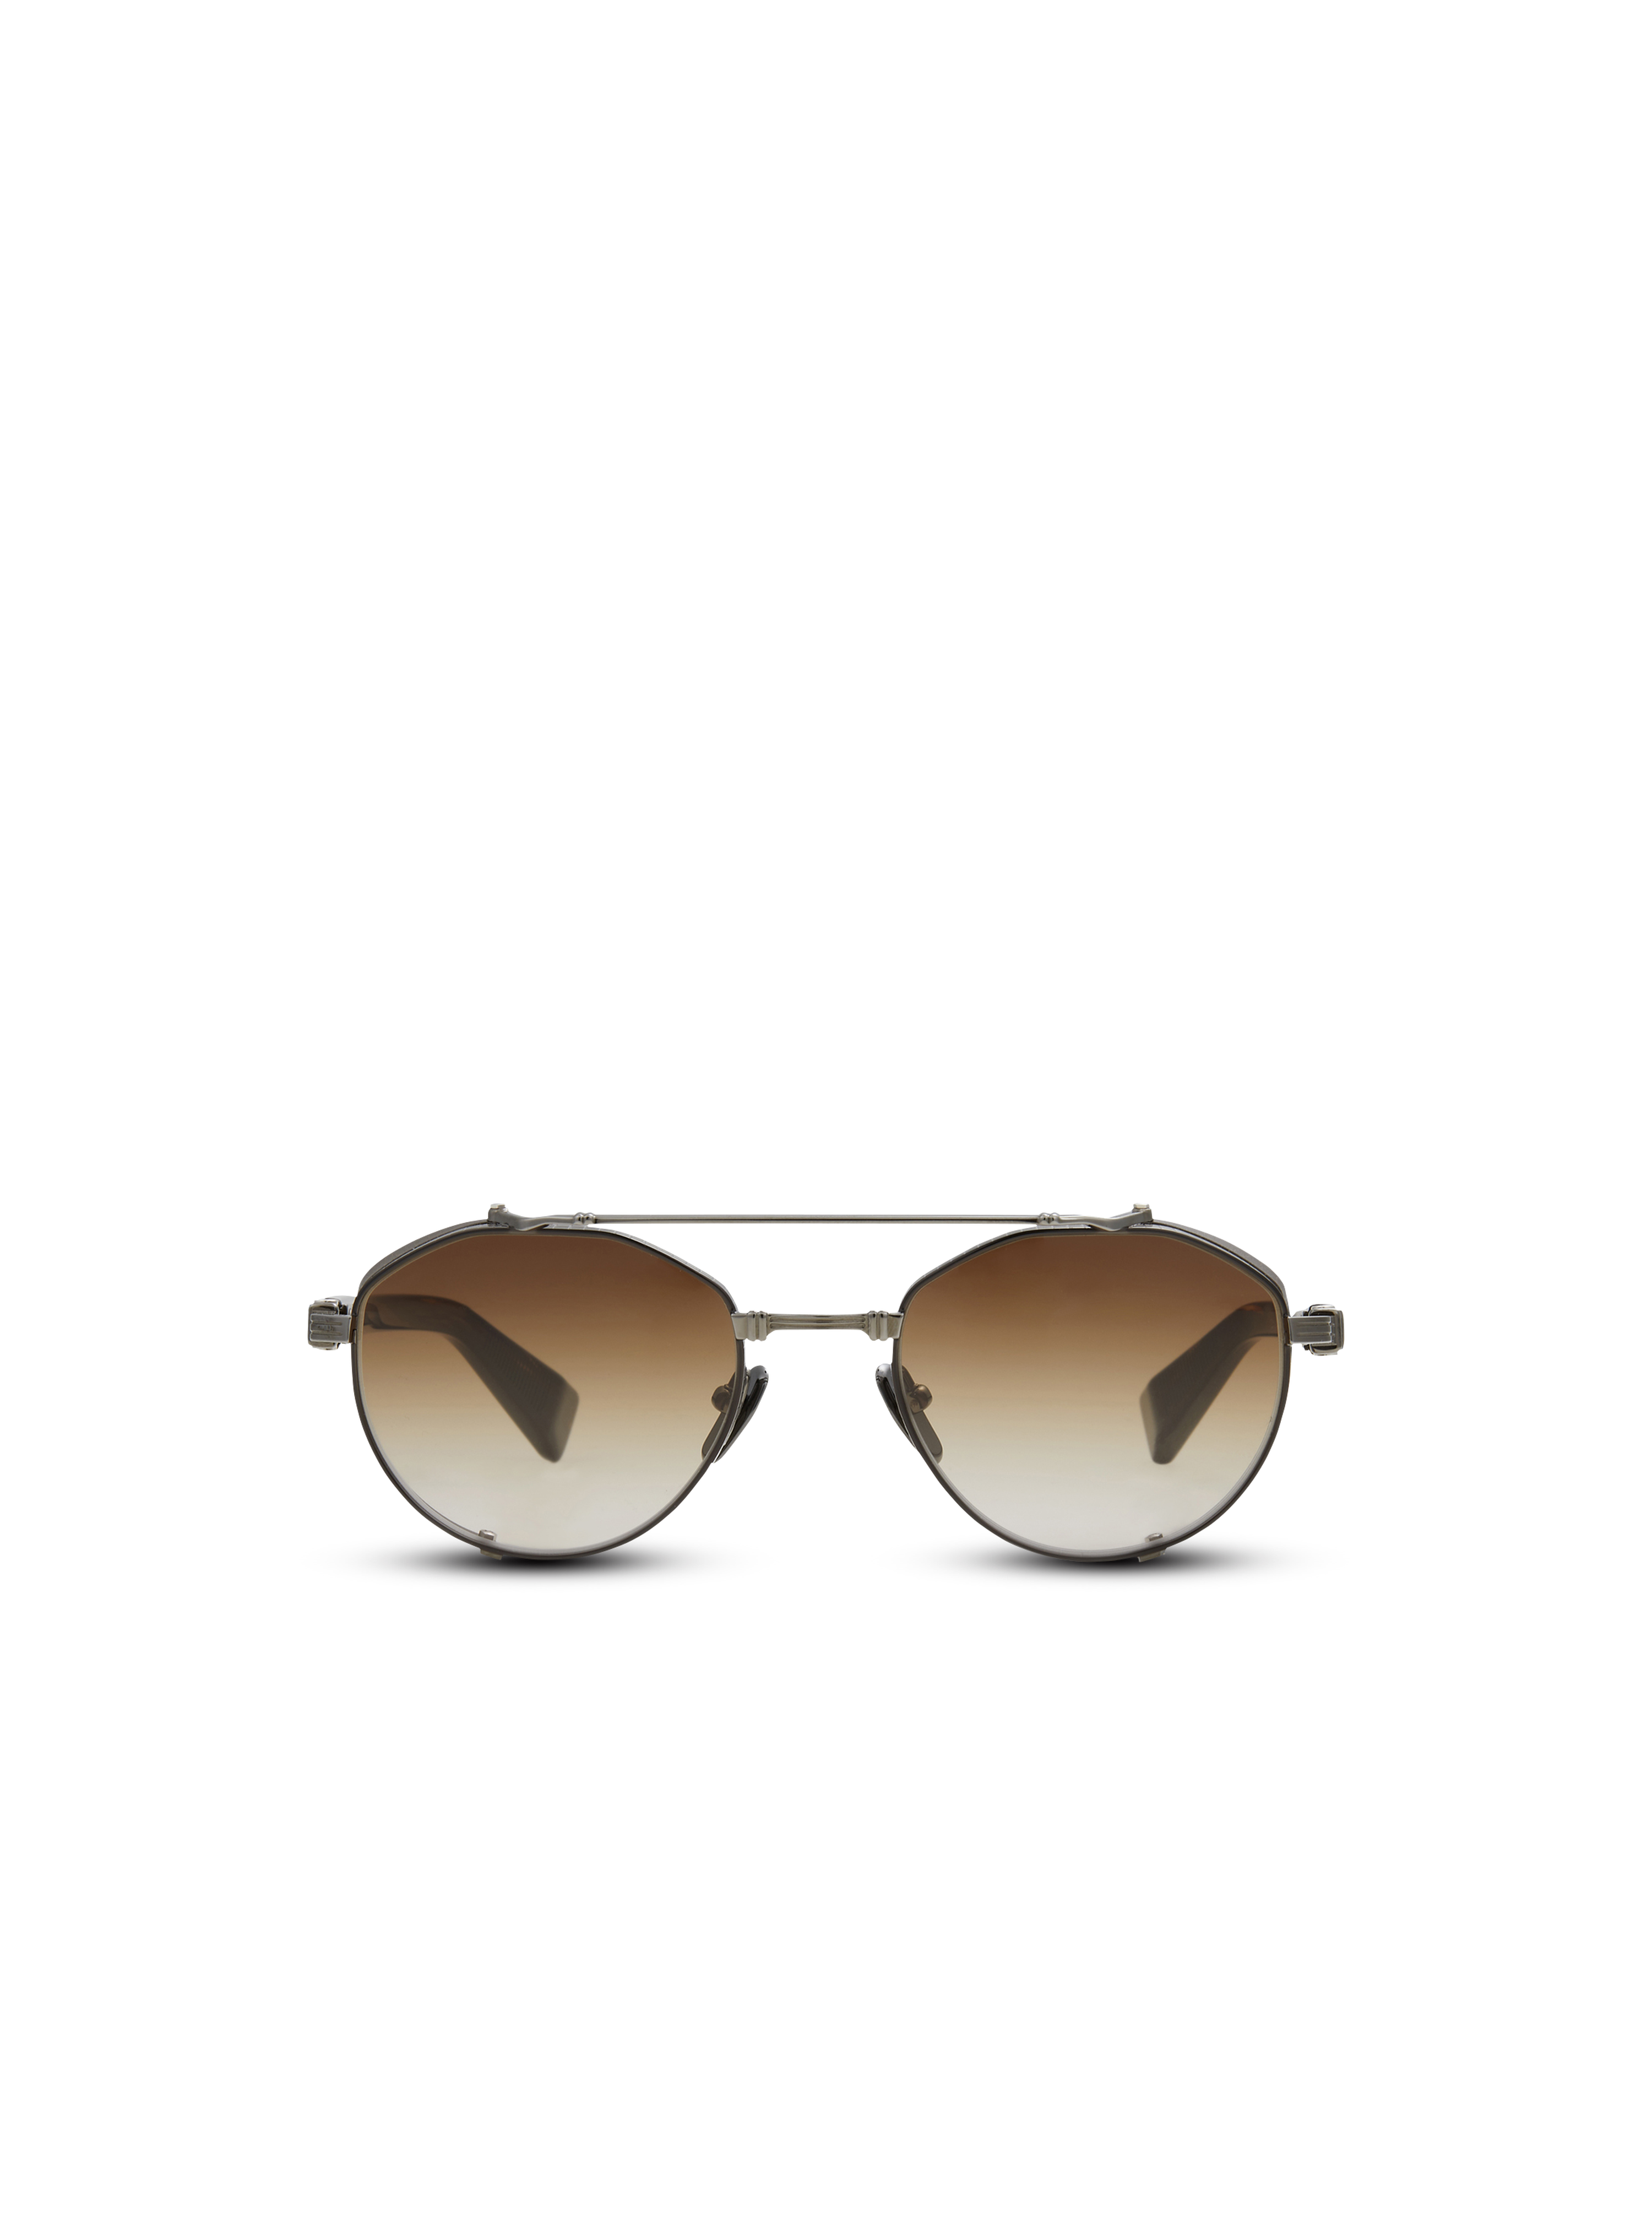 Brigade IV sunglasses, brown